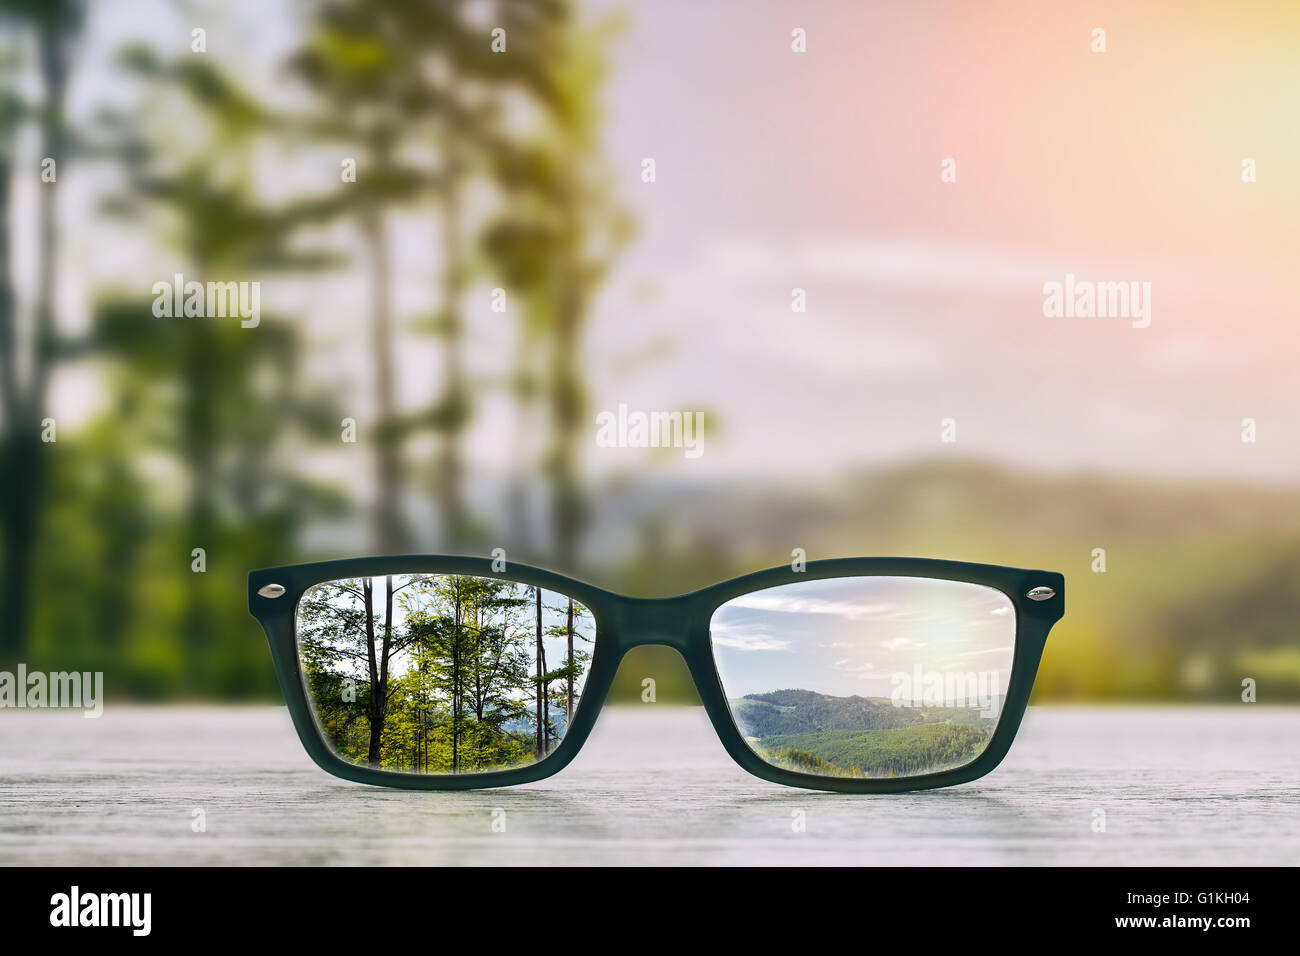 Brille Fokus Hintergrund aus Holz - stock Bild Stockfoto